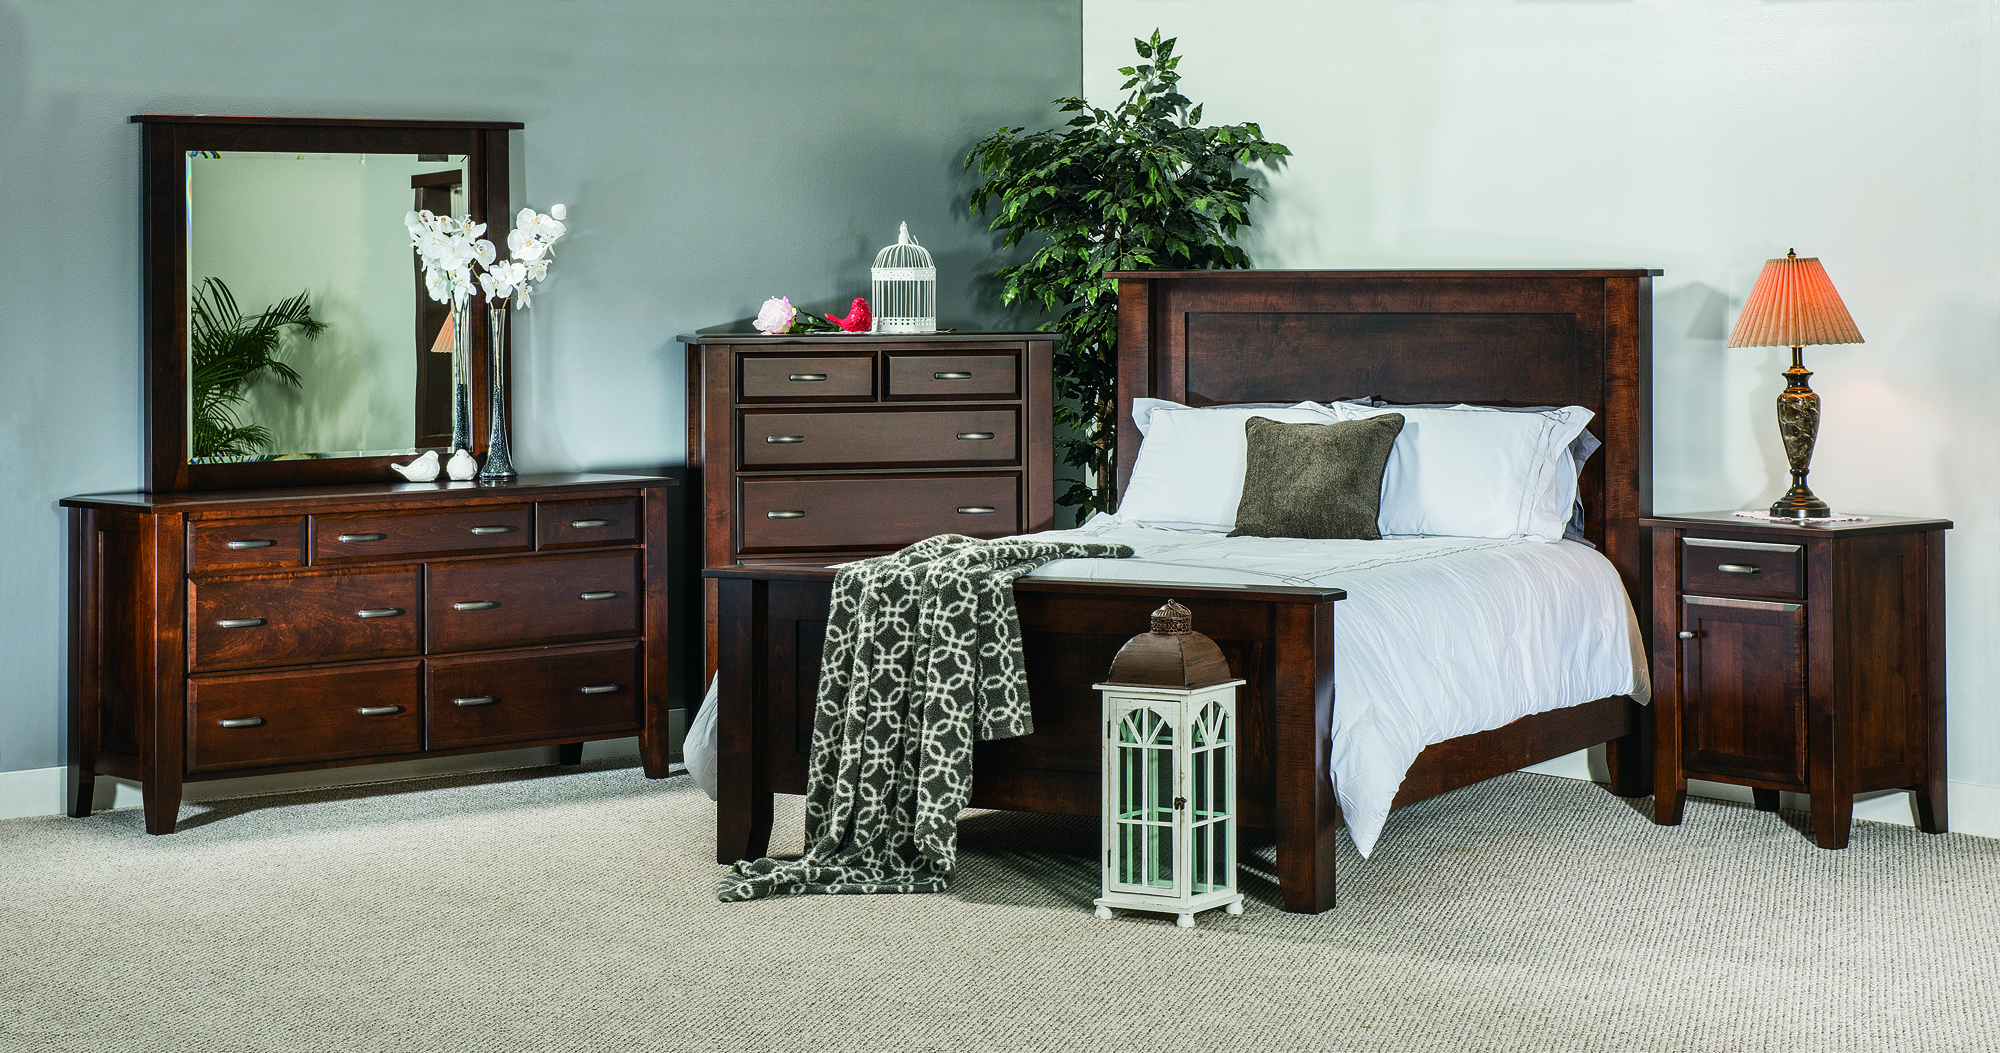 ashton-in-makerfield bedroom furniture